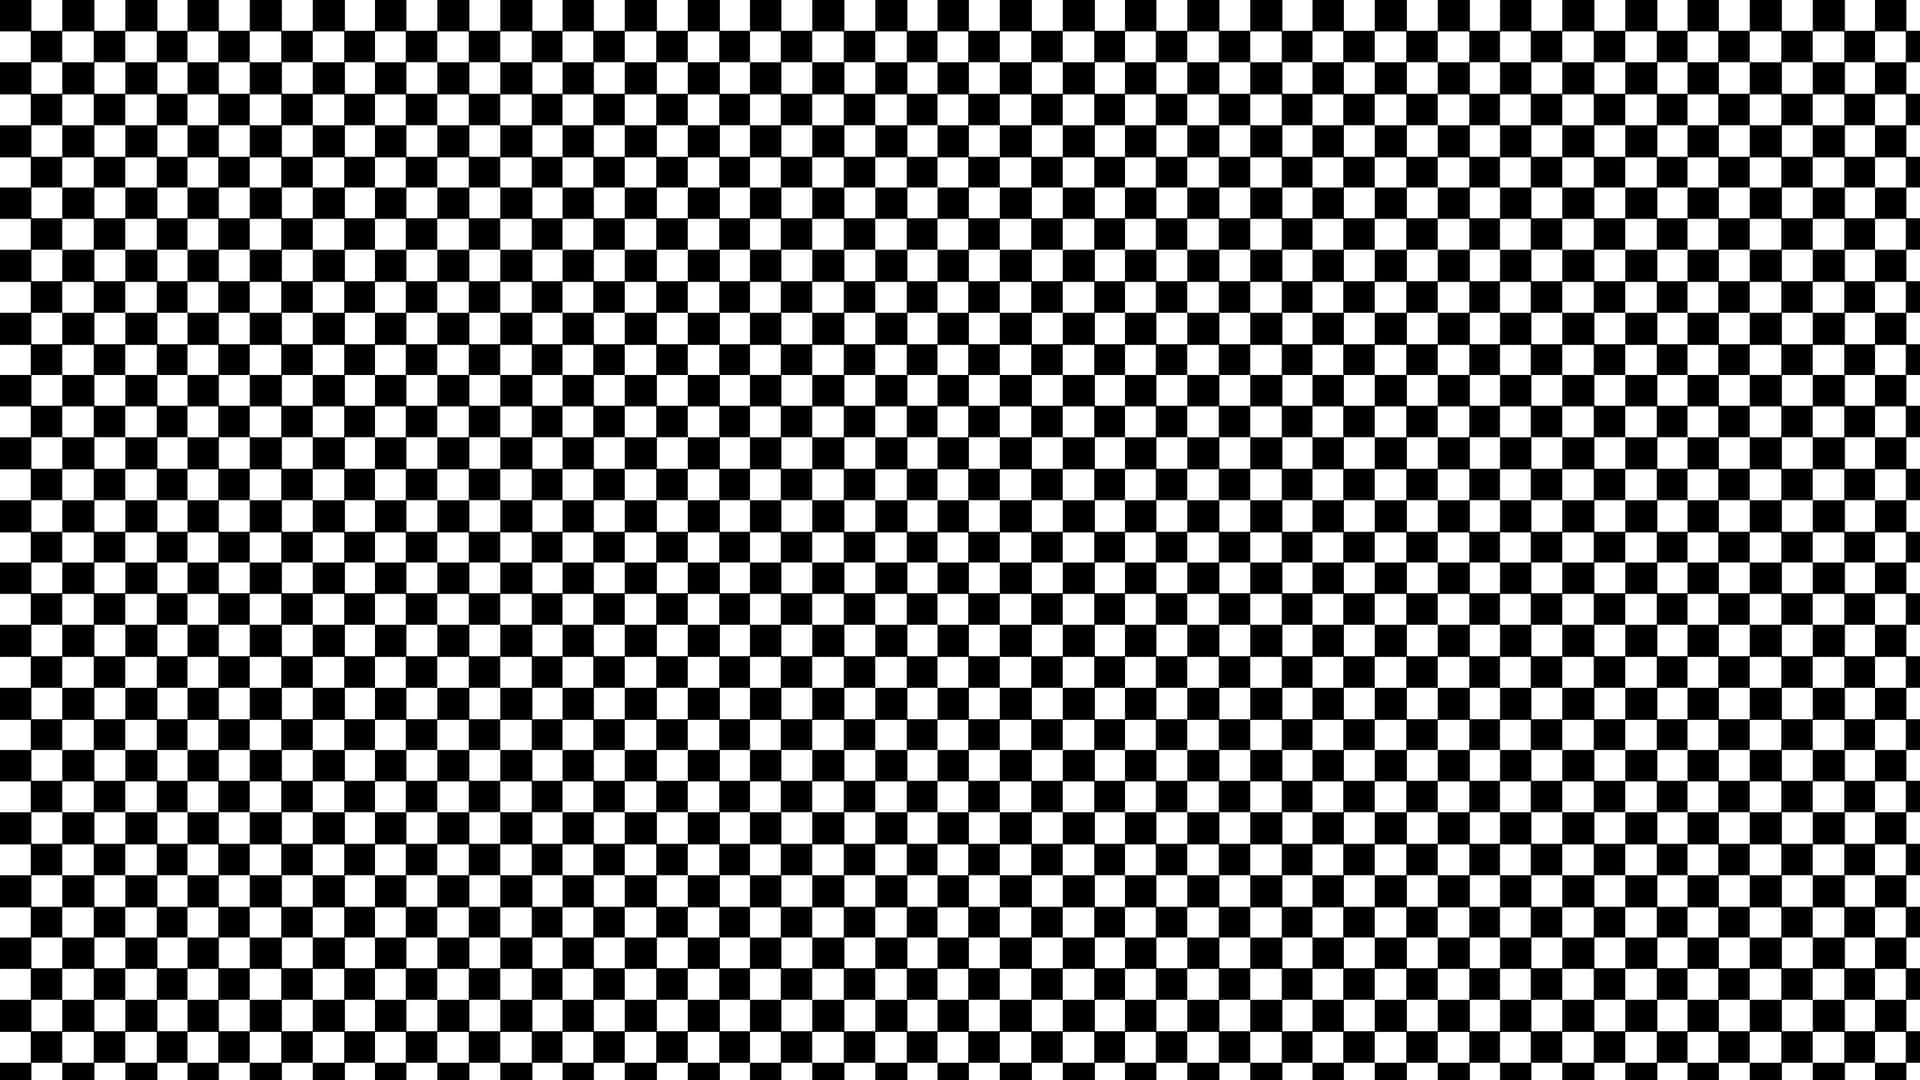 Checkered Pattern Background Wallpaper